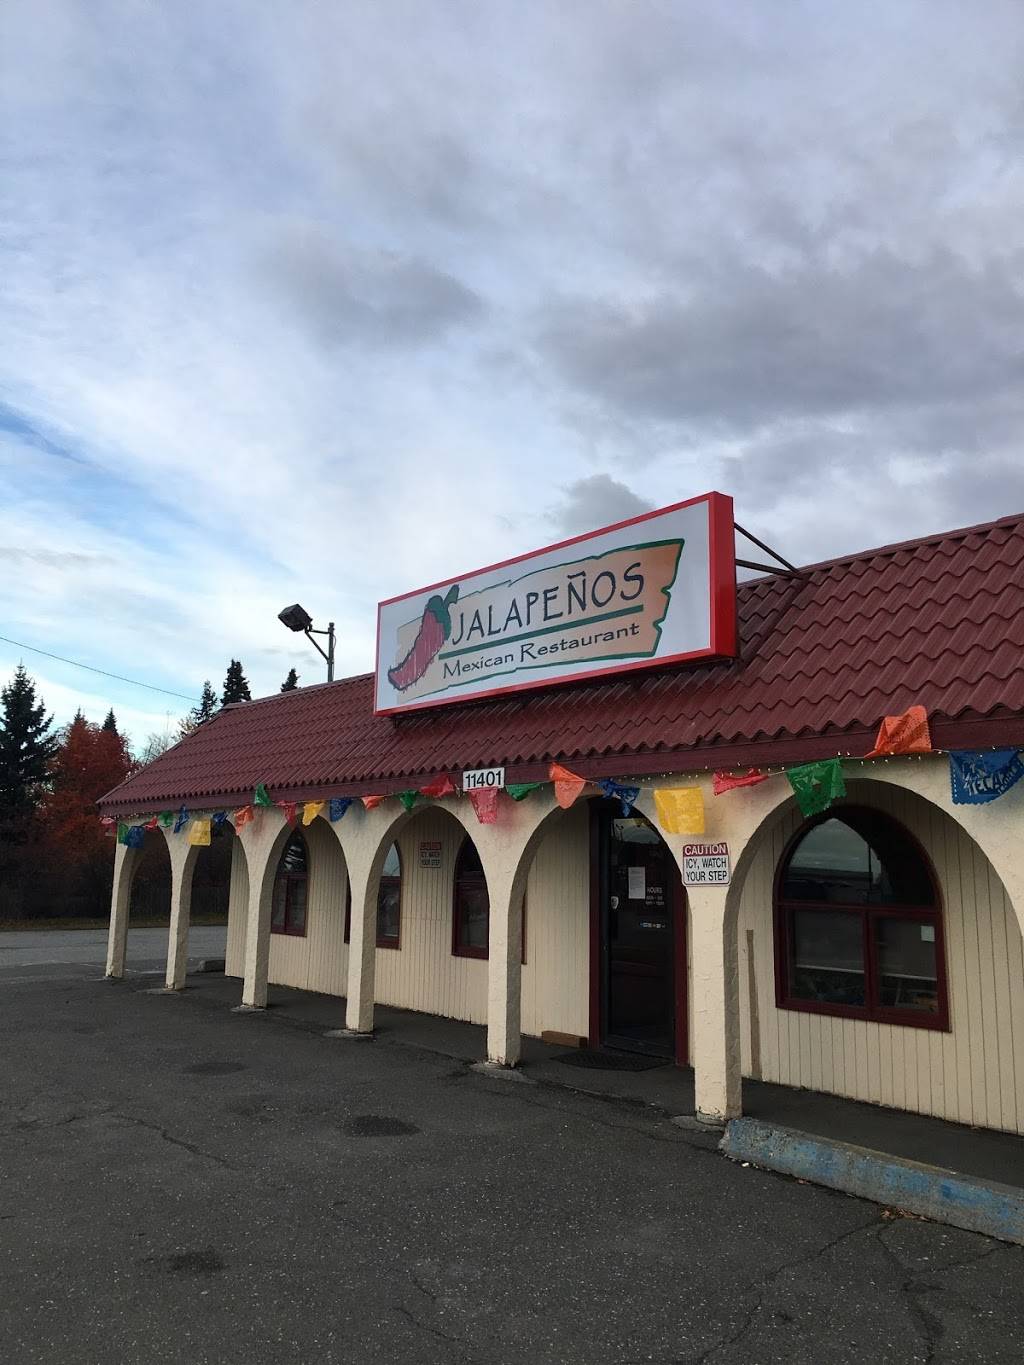 Jalapeños Mexican Restaurant | 11401 Old Seward Hwy, Anchorage, AK 99515 | Phone: (907) 349-4112